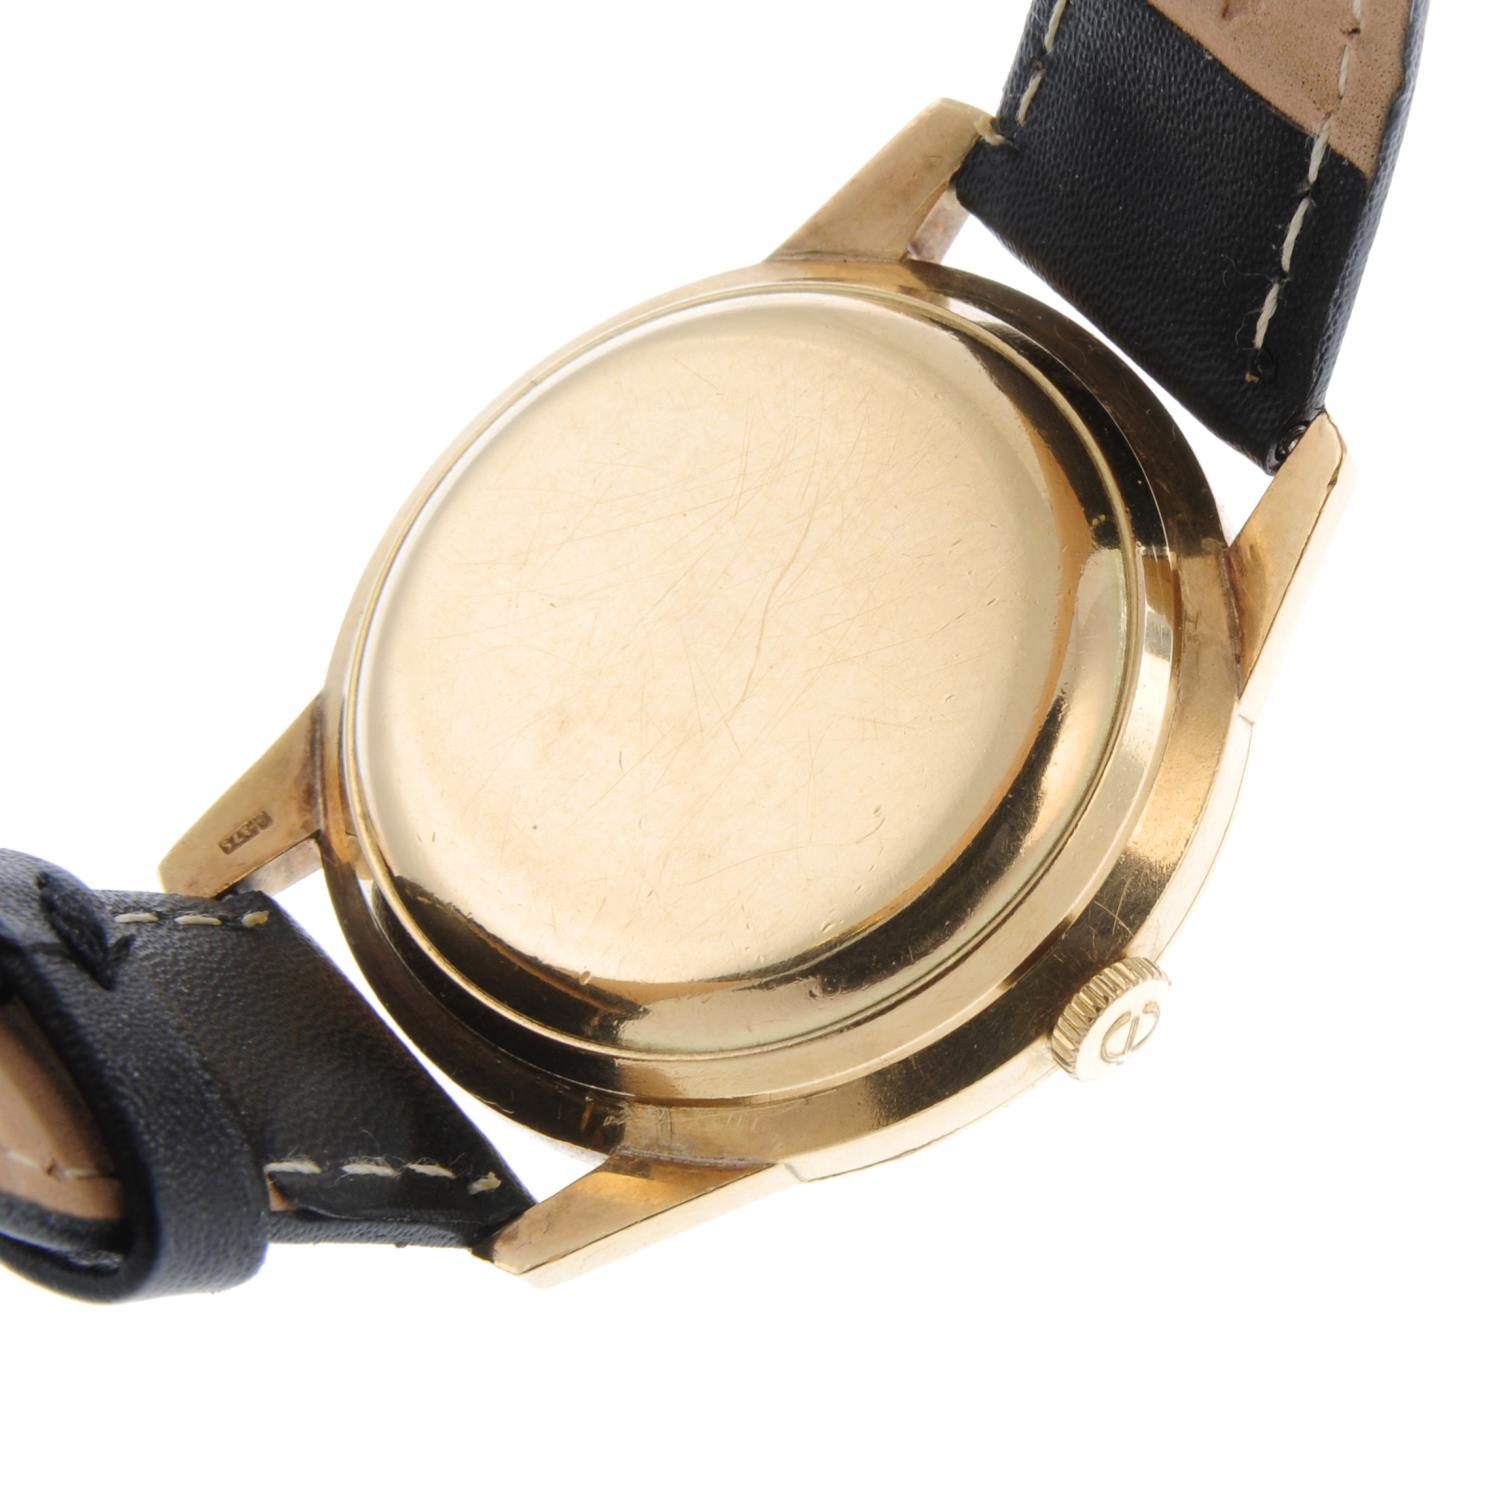 GIRARD-PERREGAUX - a gentleman's Gyromatic wrist watch. - Image 3 of 4